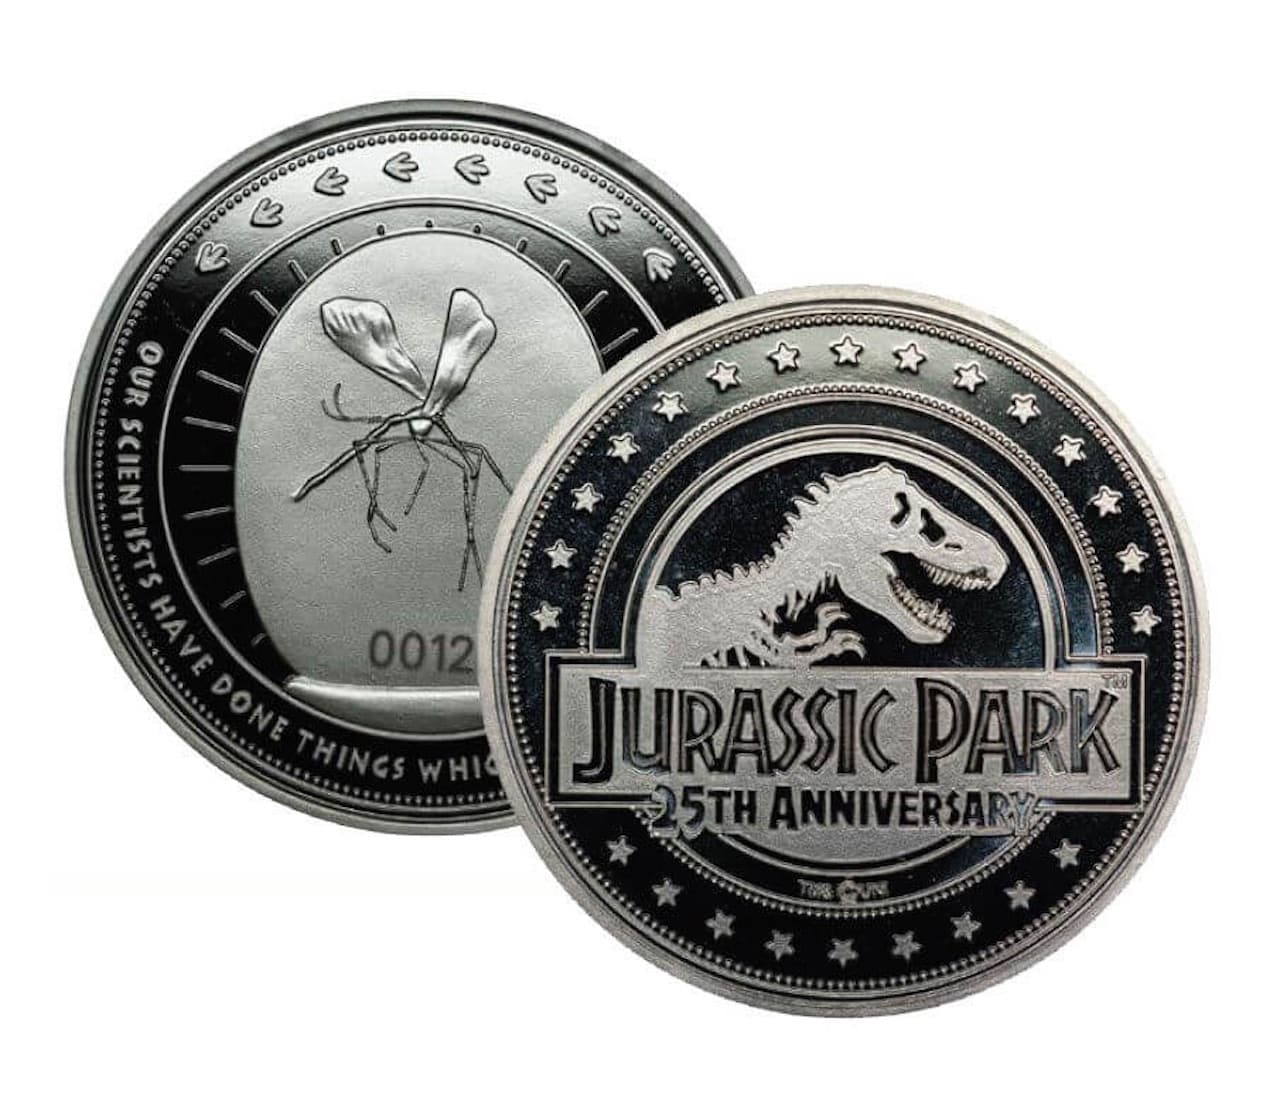 Jurassic Park 25